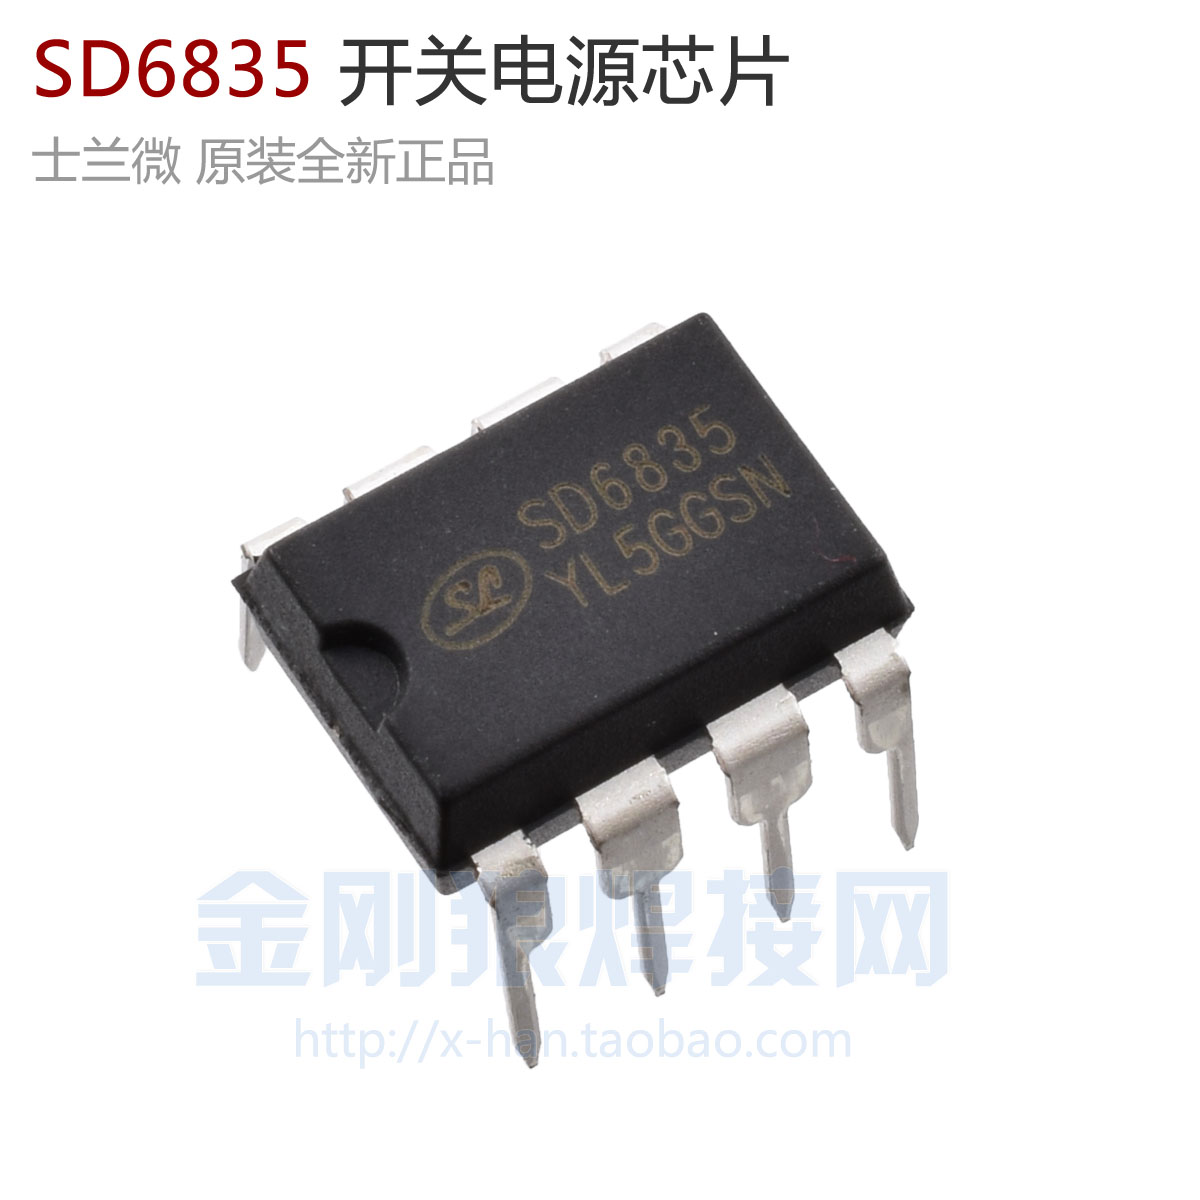 SD6835 开关电源 芯片 集成块 IC 士兰微 原装全新正品 8脚